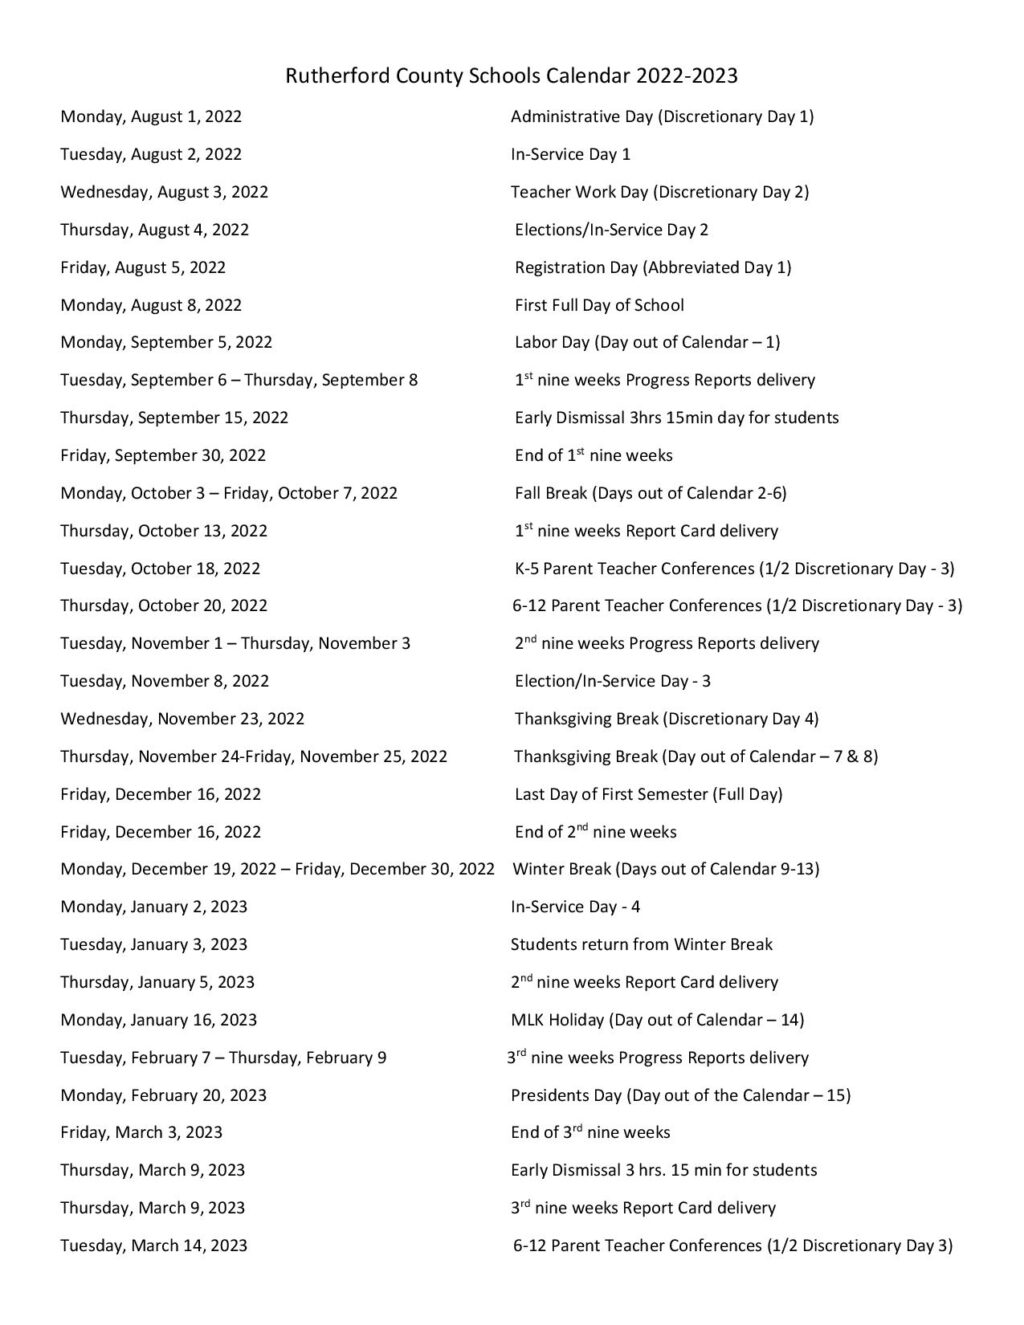 Rutherford County Schools Calendar Holidays 2022 2023 PDF